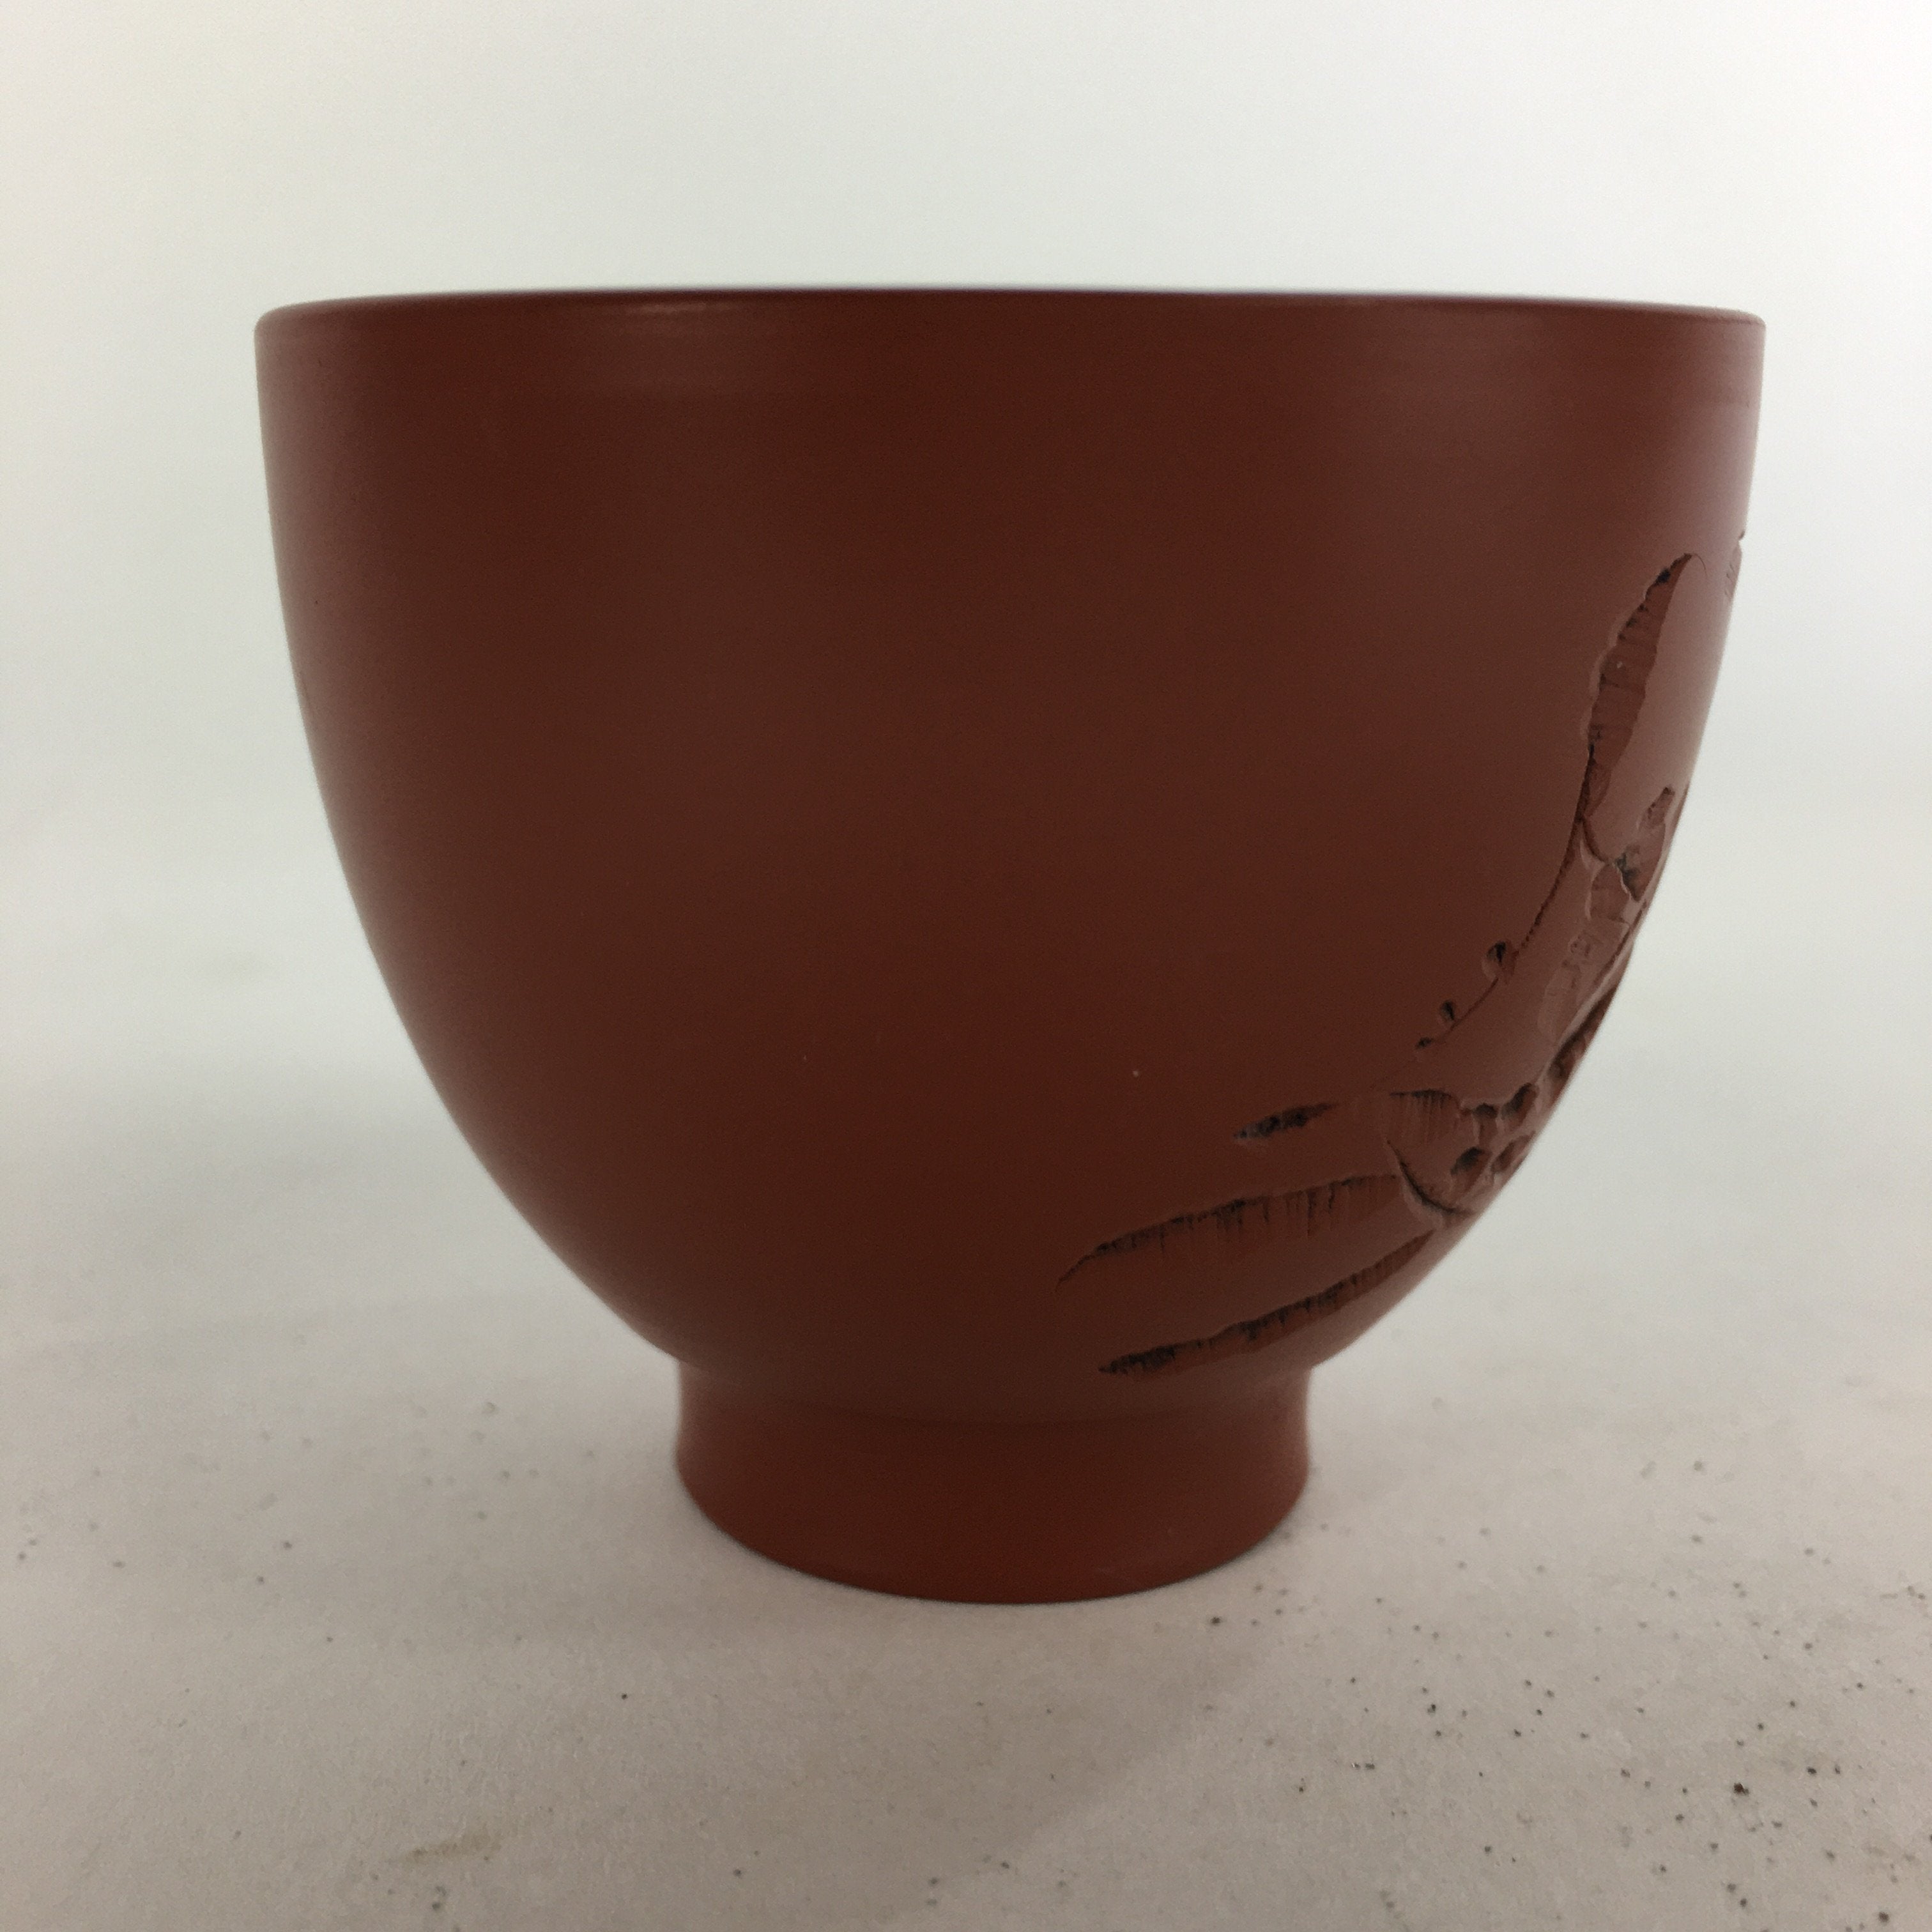 Japanese Ceramic Teacup Vtg Syudoro Red Clay Pottery Yunomi Sencha QT114